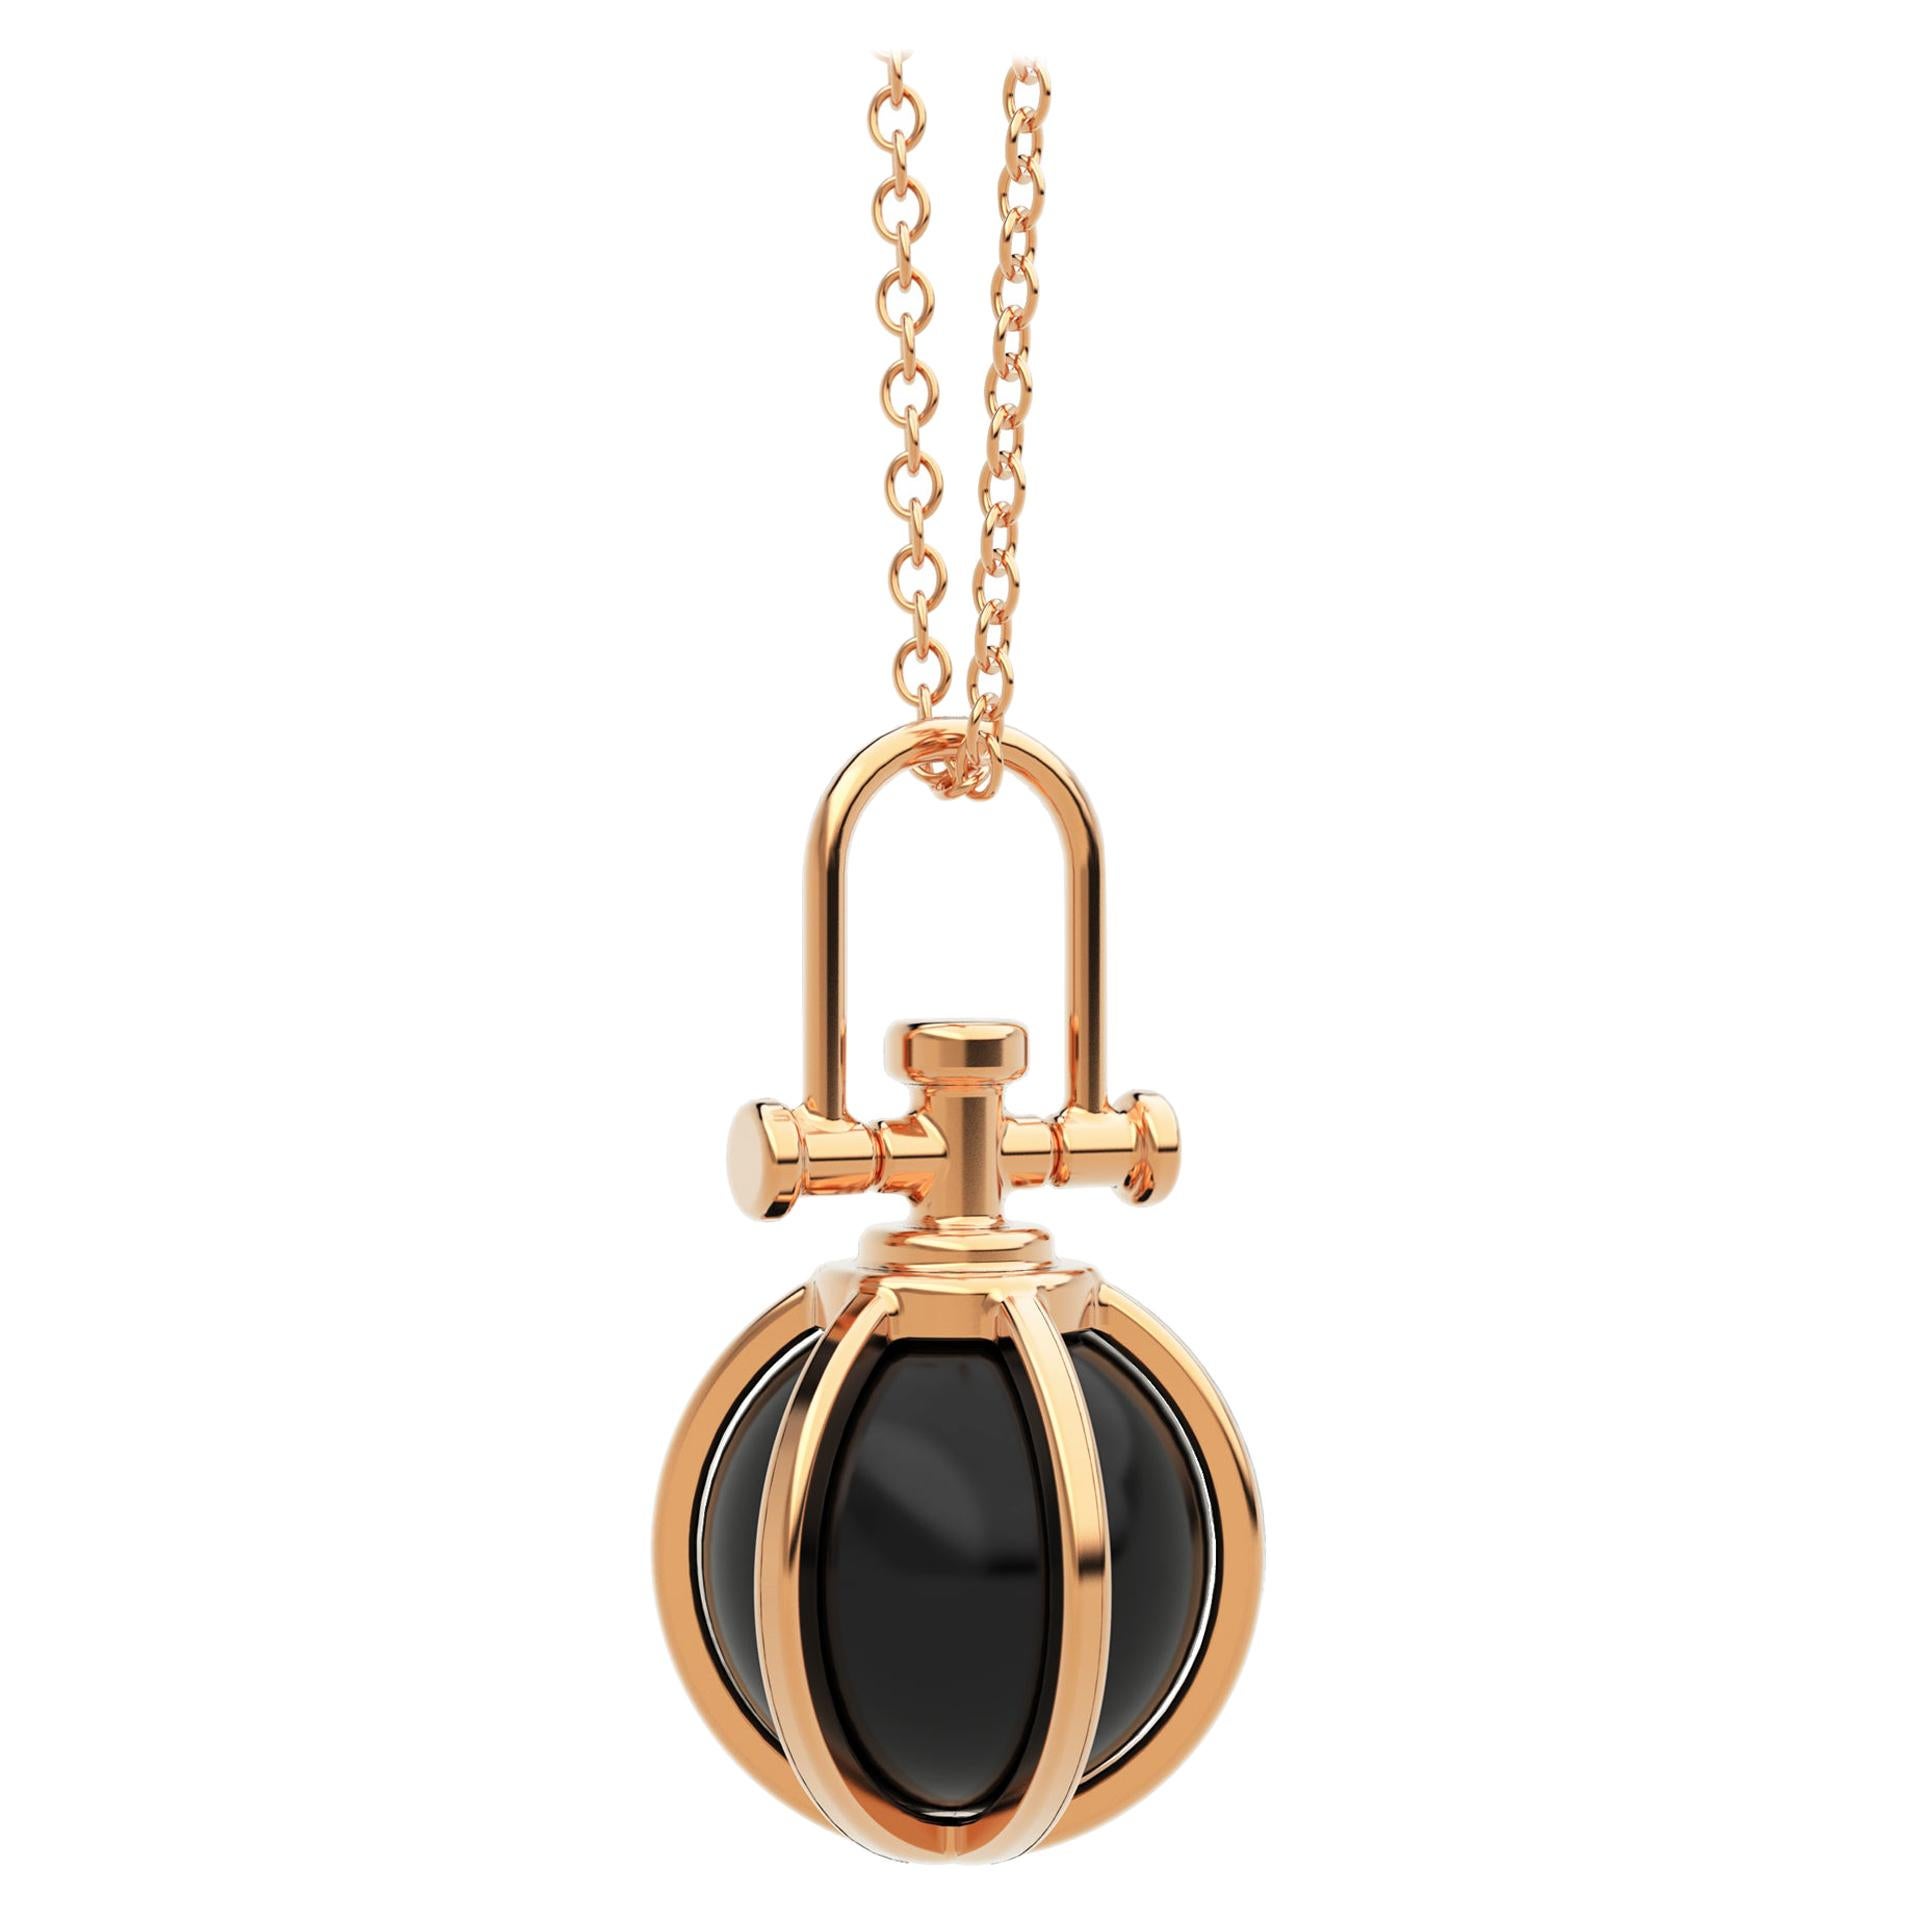 The Moderns Collier pendentif talisman en or rose 18k avec onyx noir